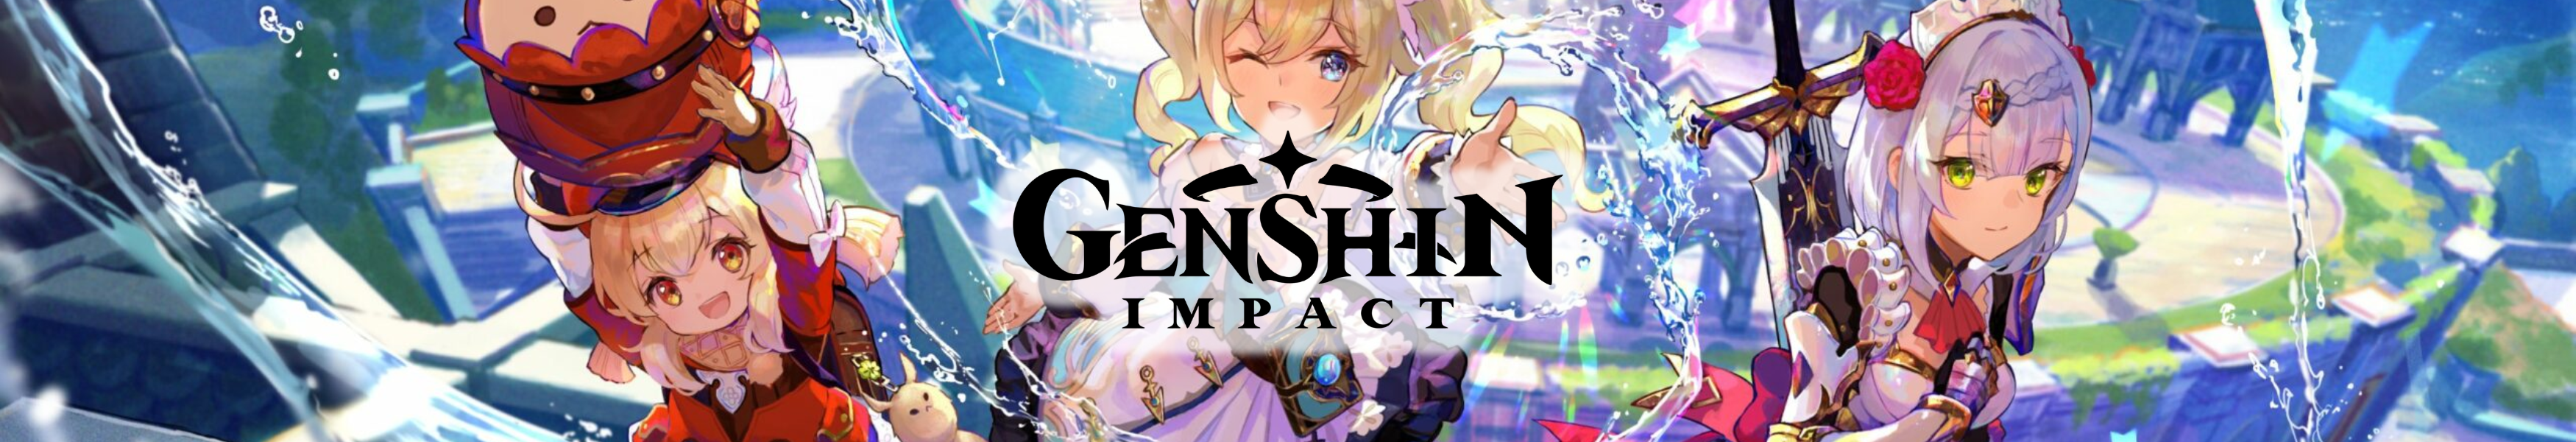 Genshin Impact Badges